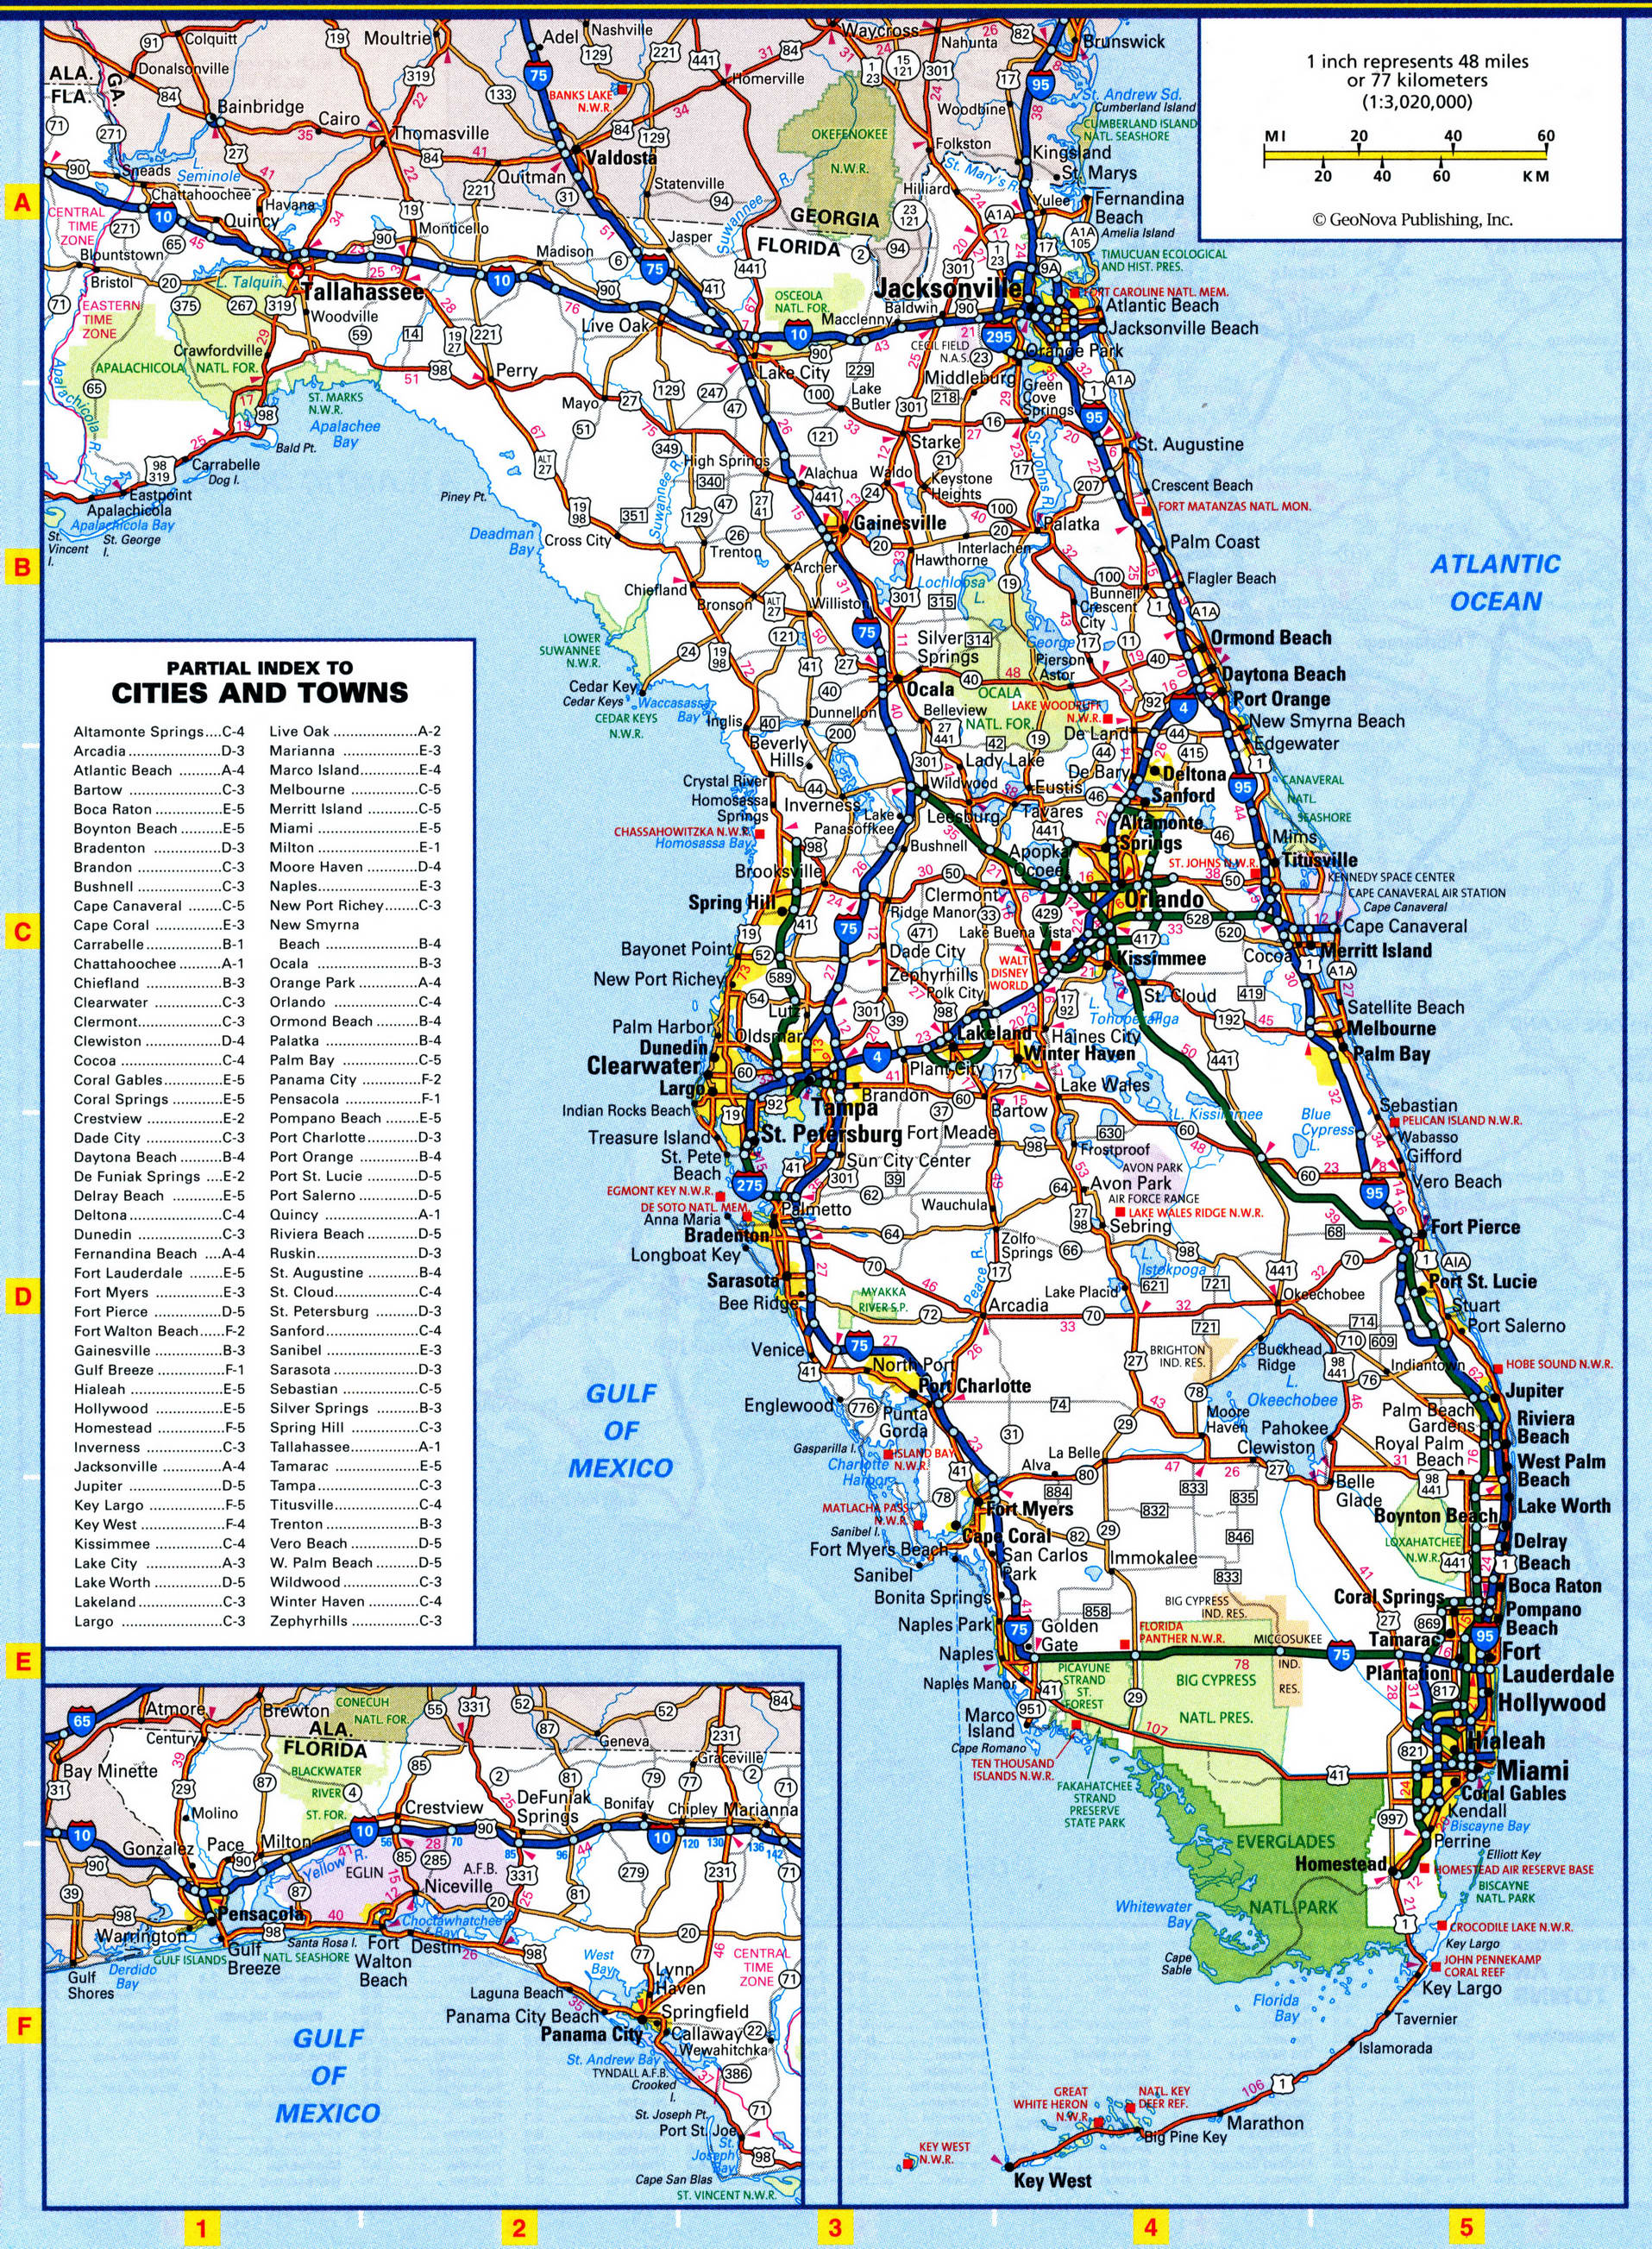 Florida highway map